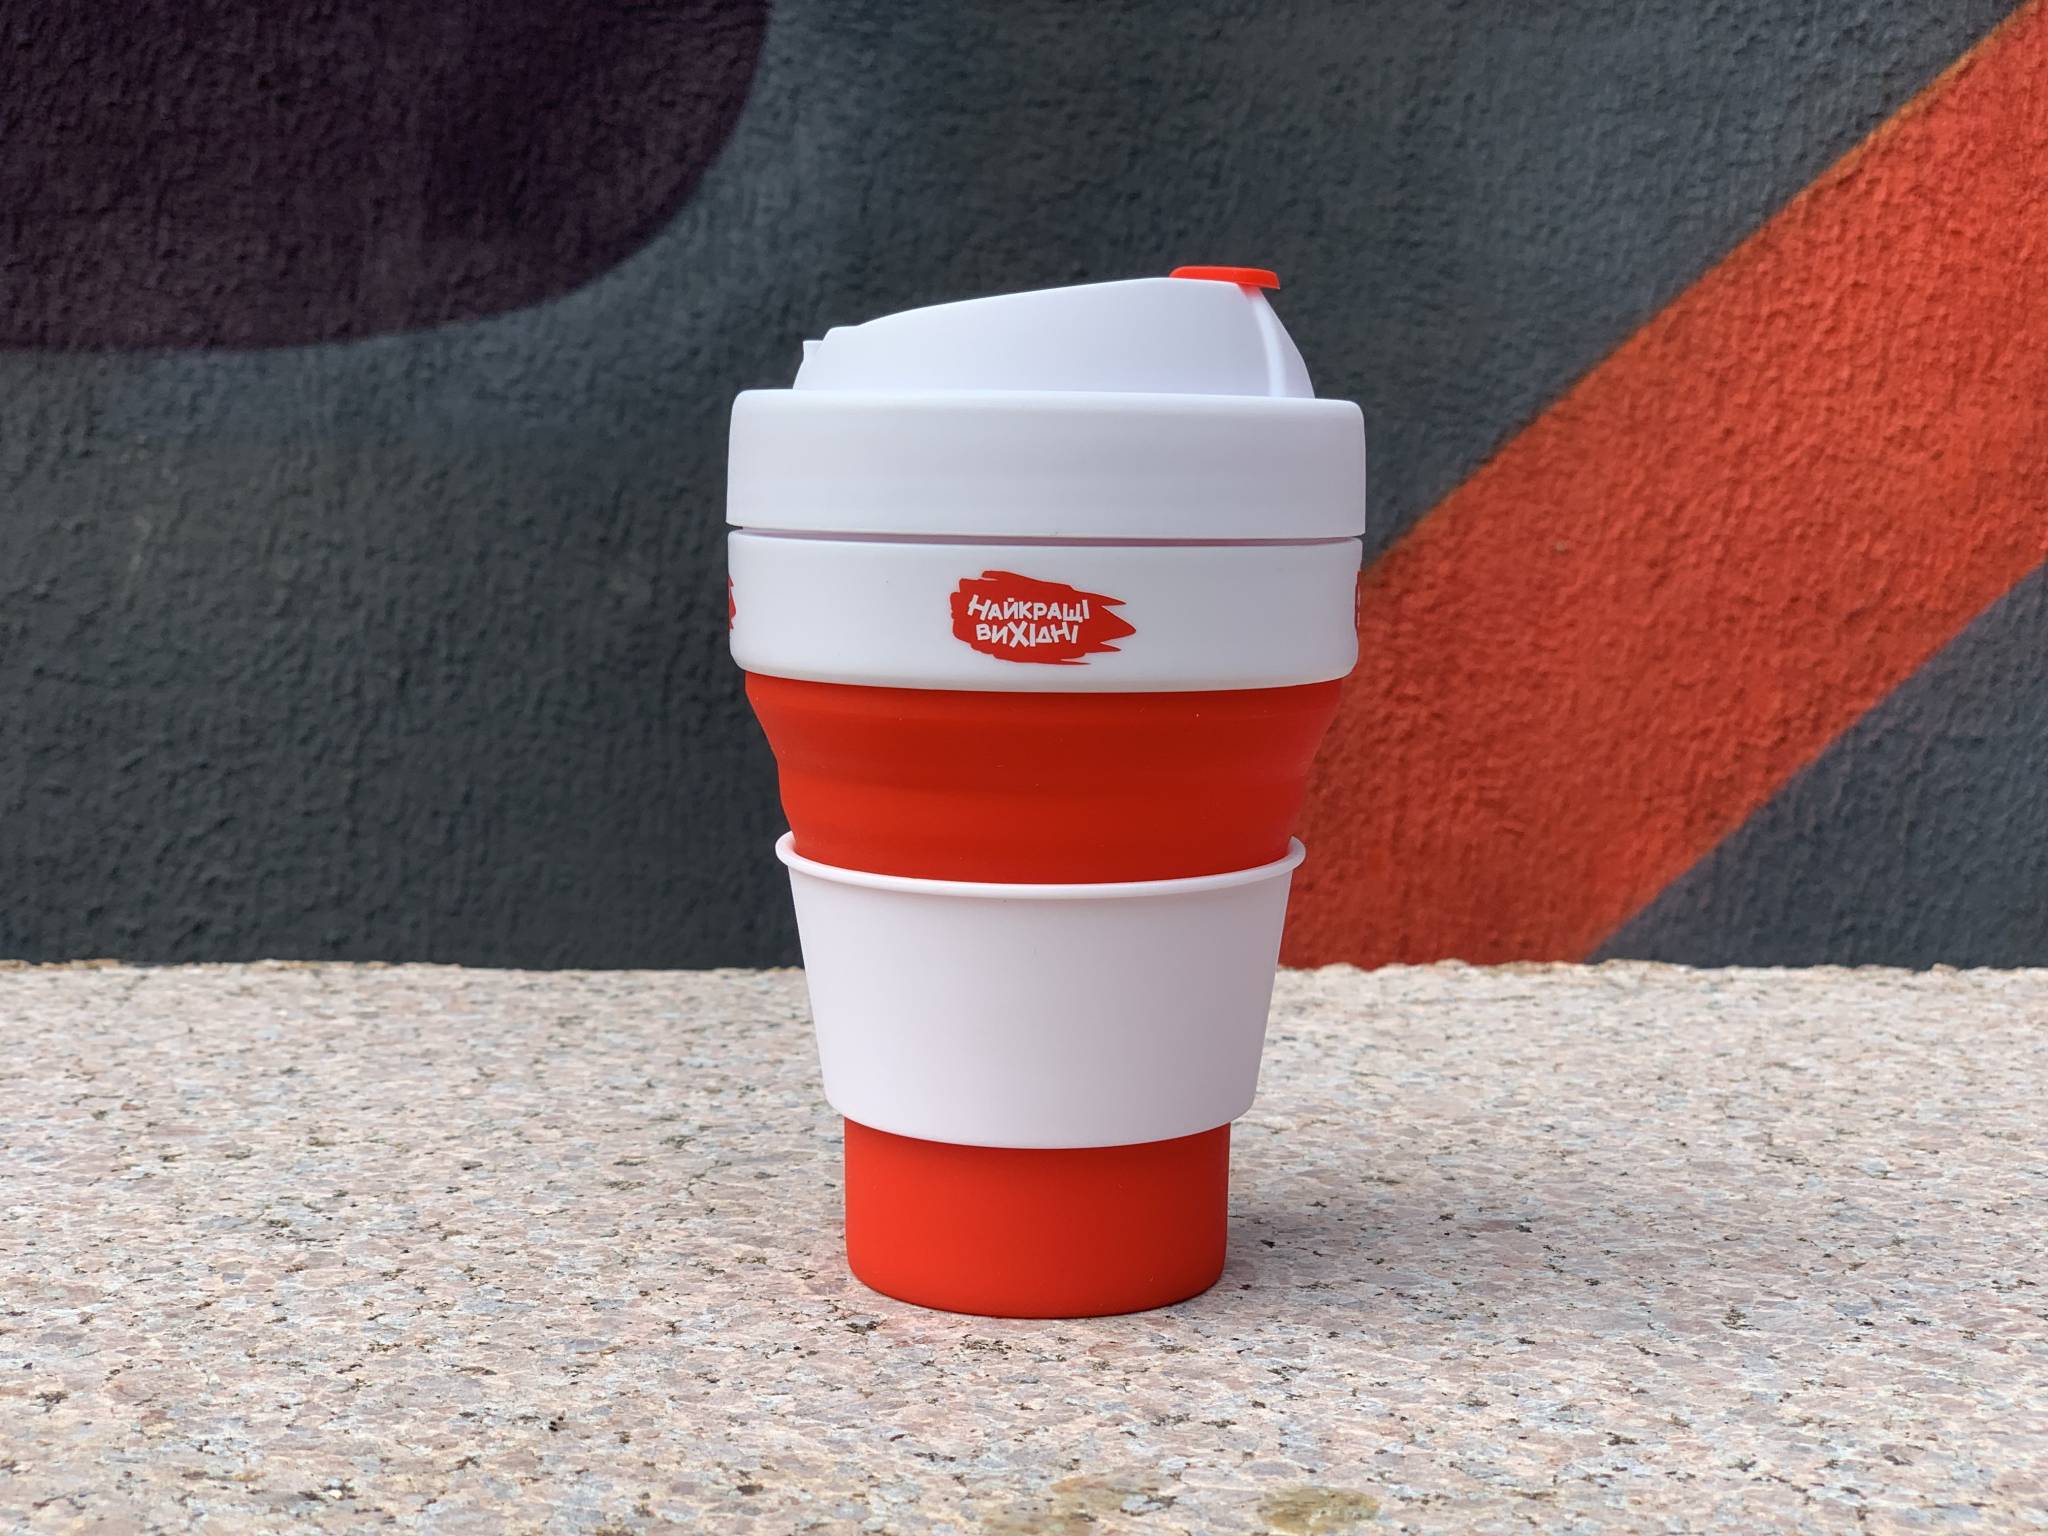 Foldable silicone mug 350ml, red-white color